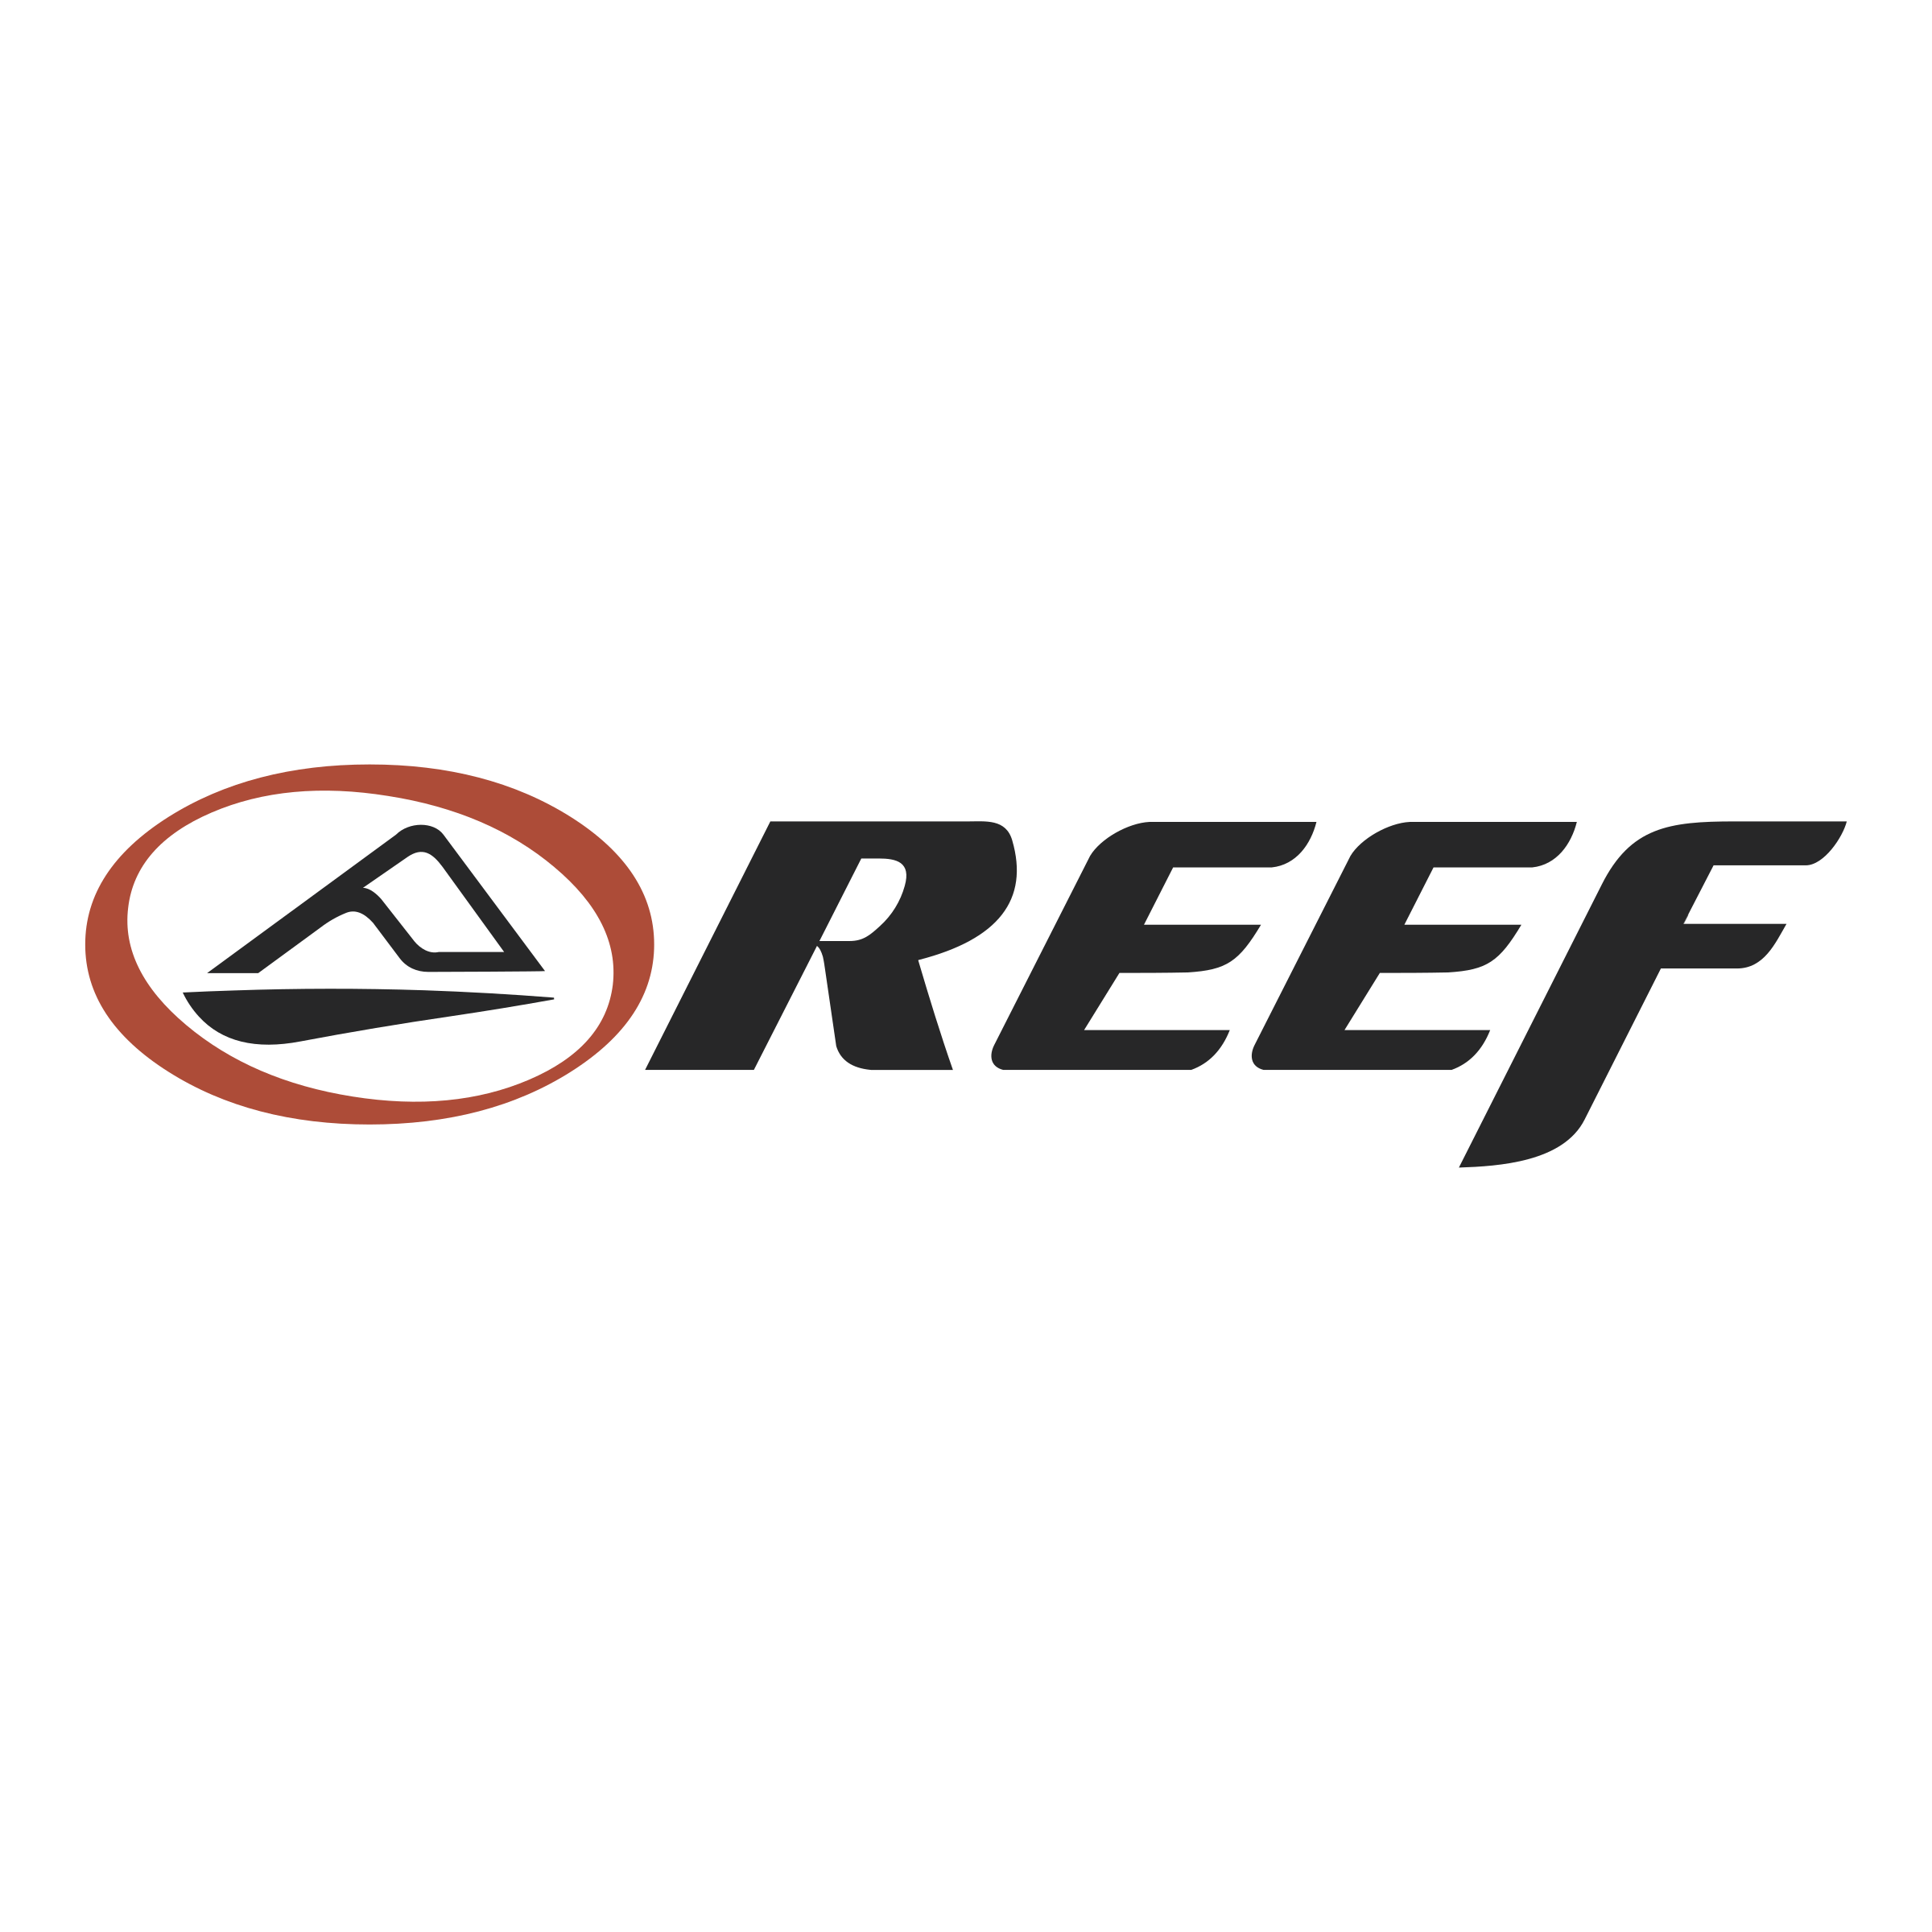 Reef Logo - Reef Logo PNG Transparent & SVG Vector - Freebie Supply